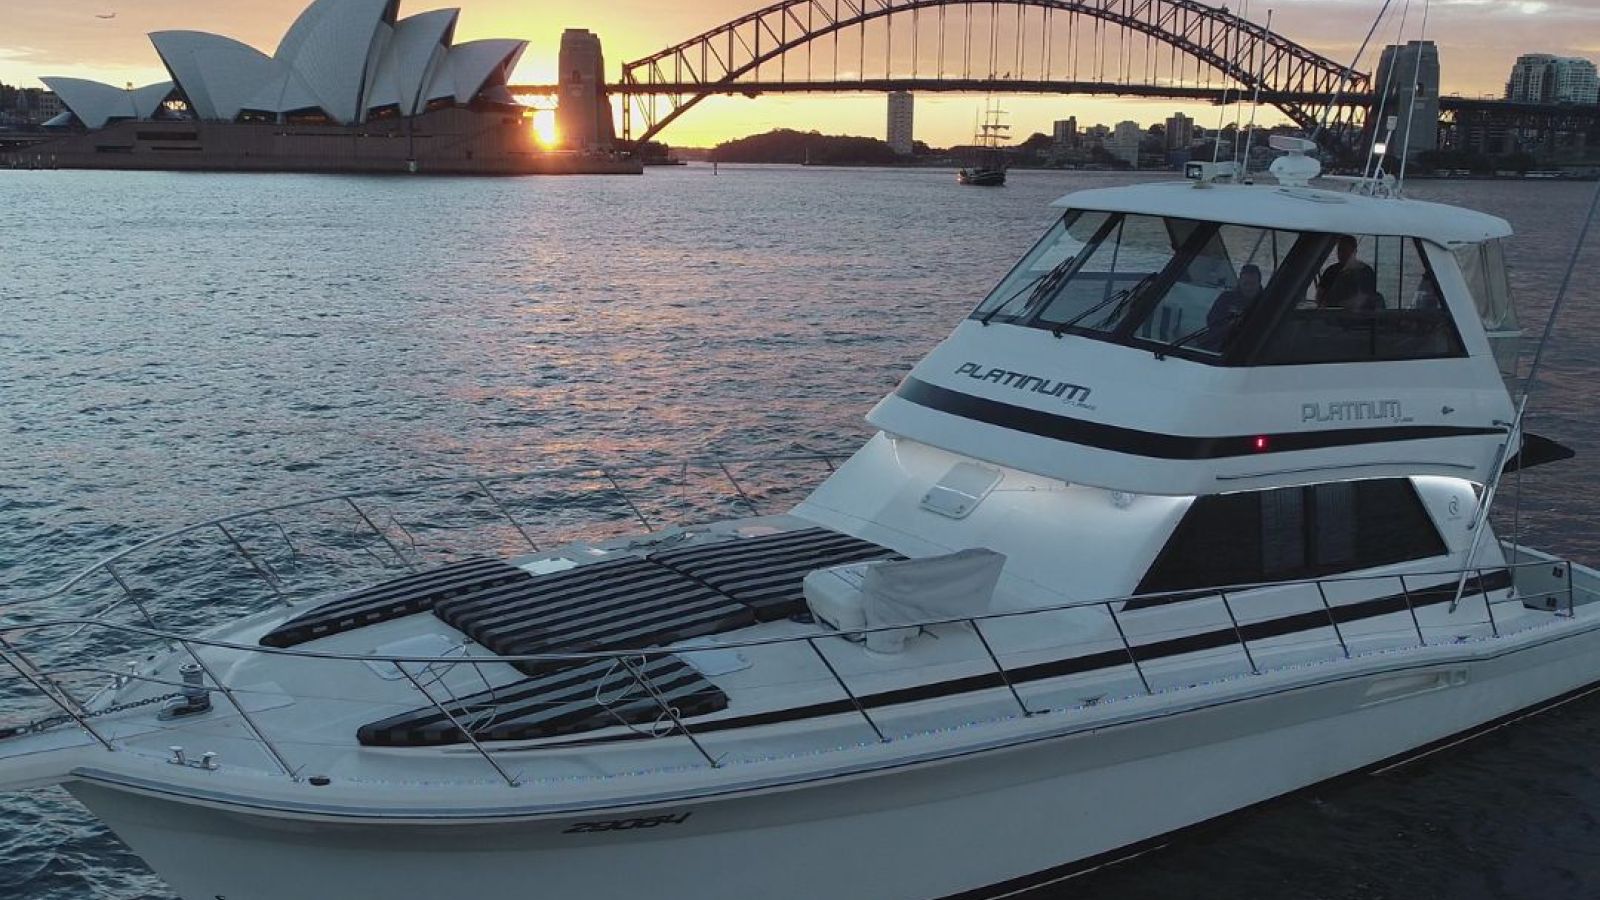 Platinum - Boat Hire Sydney Sunset